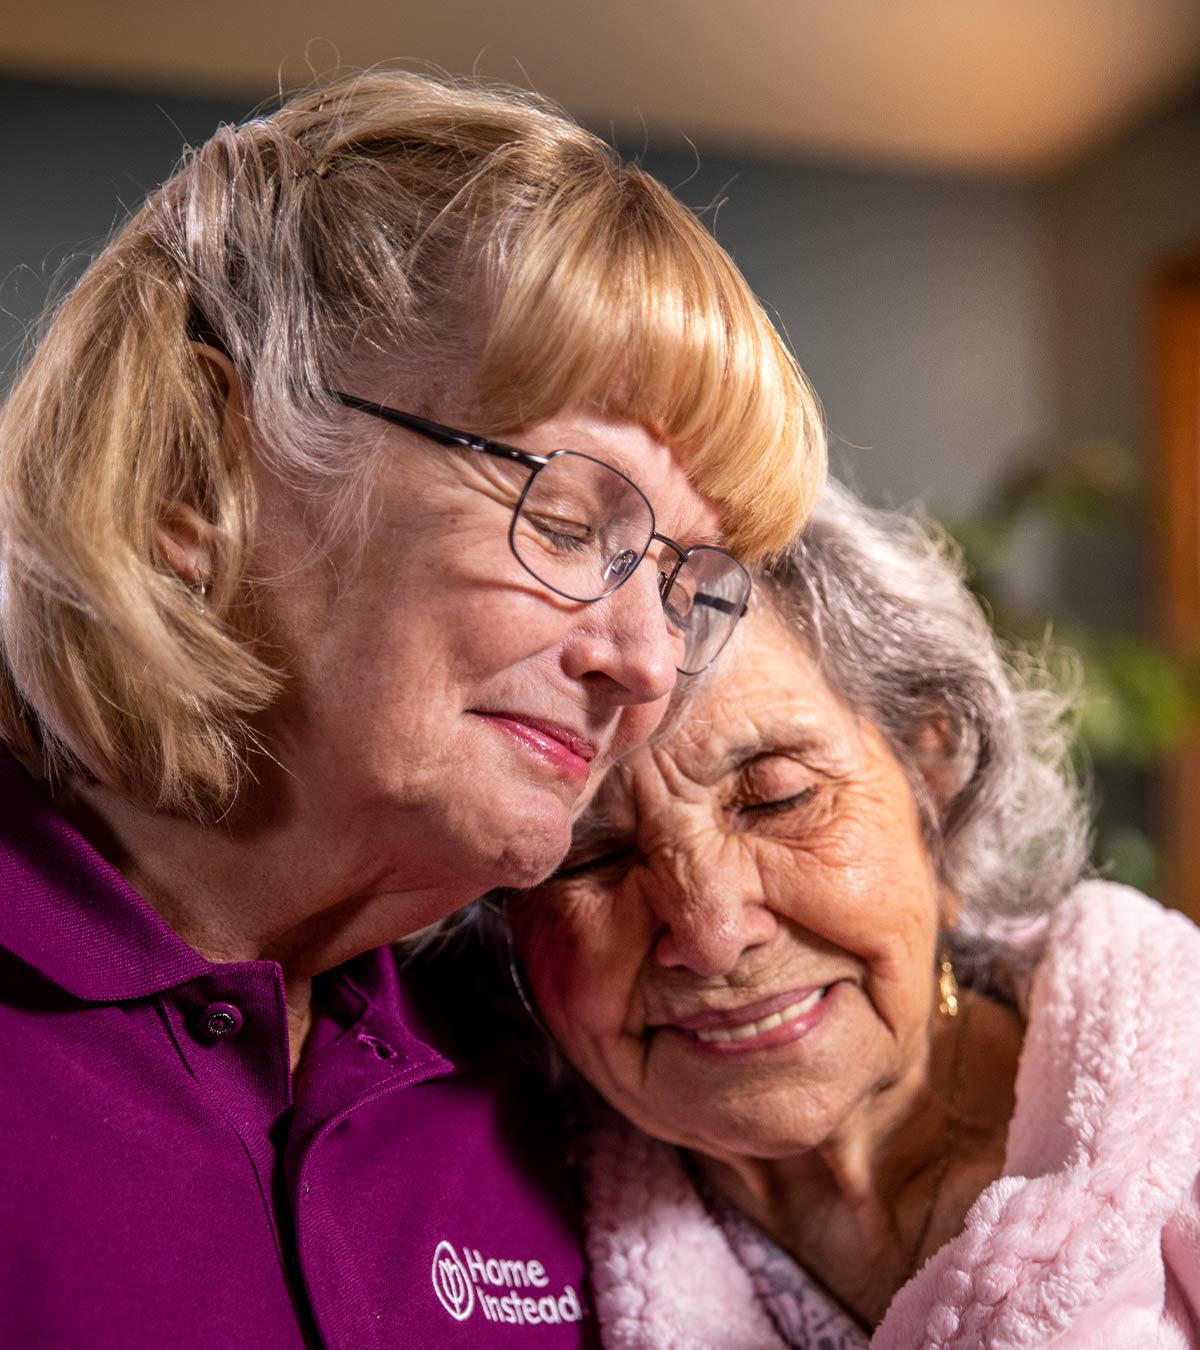 CAREGiver providing in-home senior care services. Home Instead of Fredericksburg, VA provides Elder Care to aging adults. 